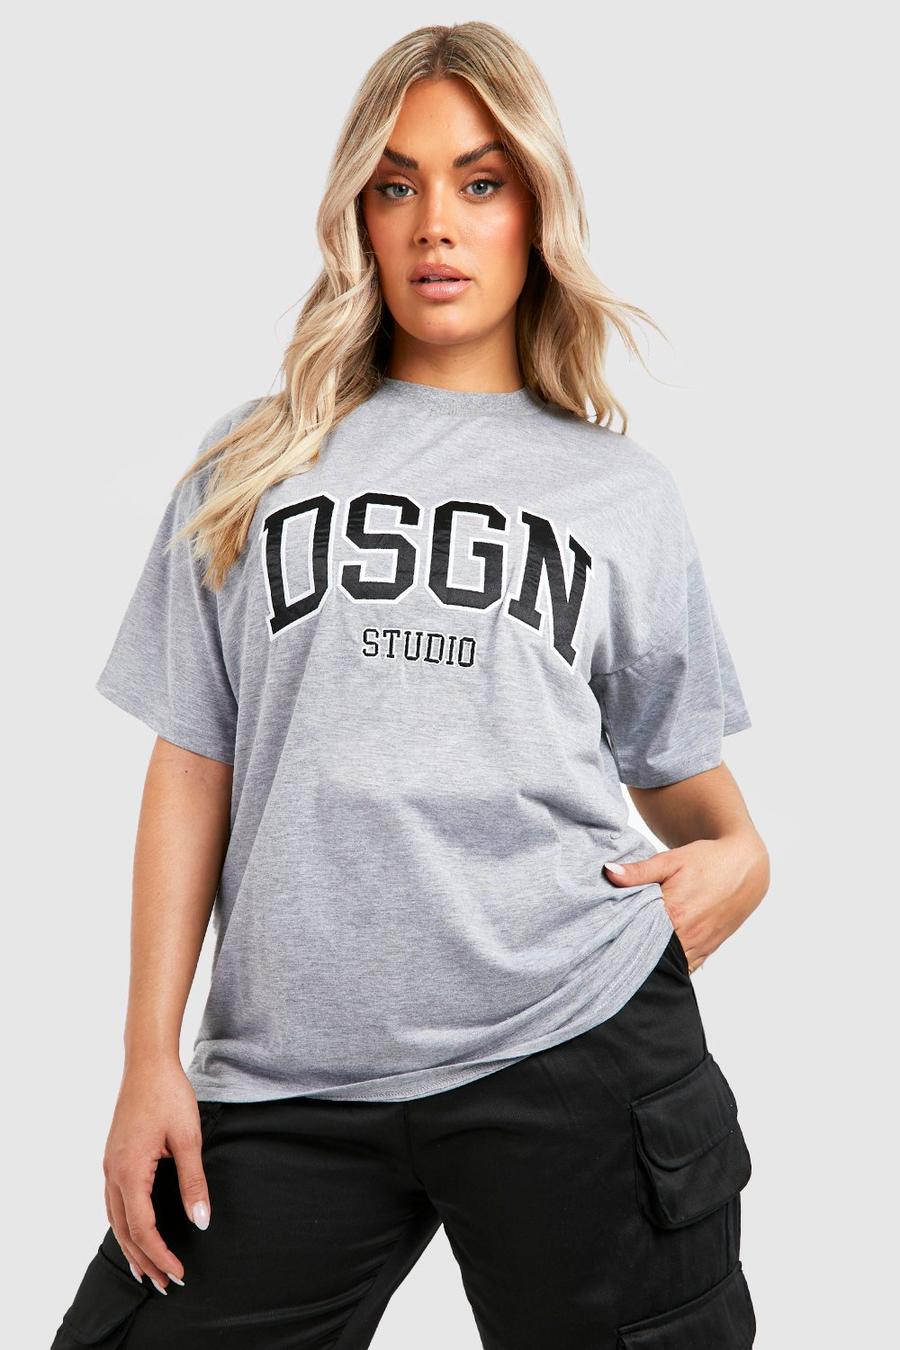 Grey marl Plus Applique Dsgn Studio Oversized T-Shirt